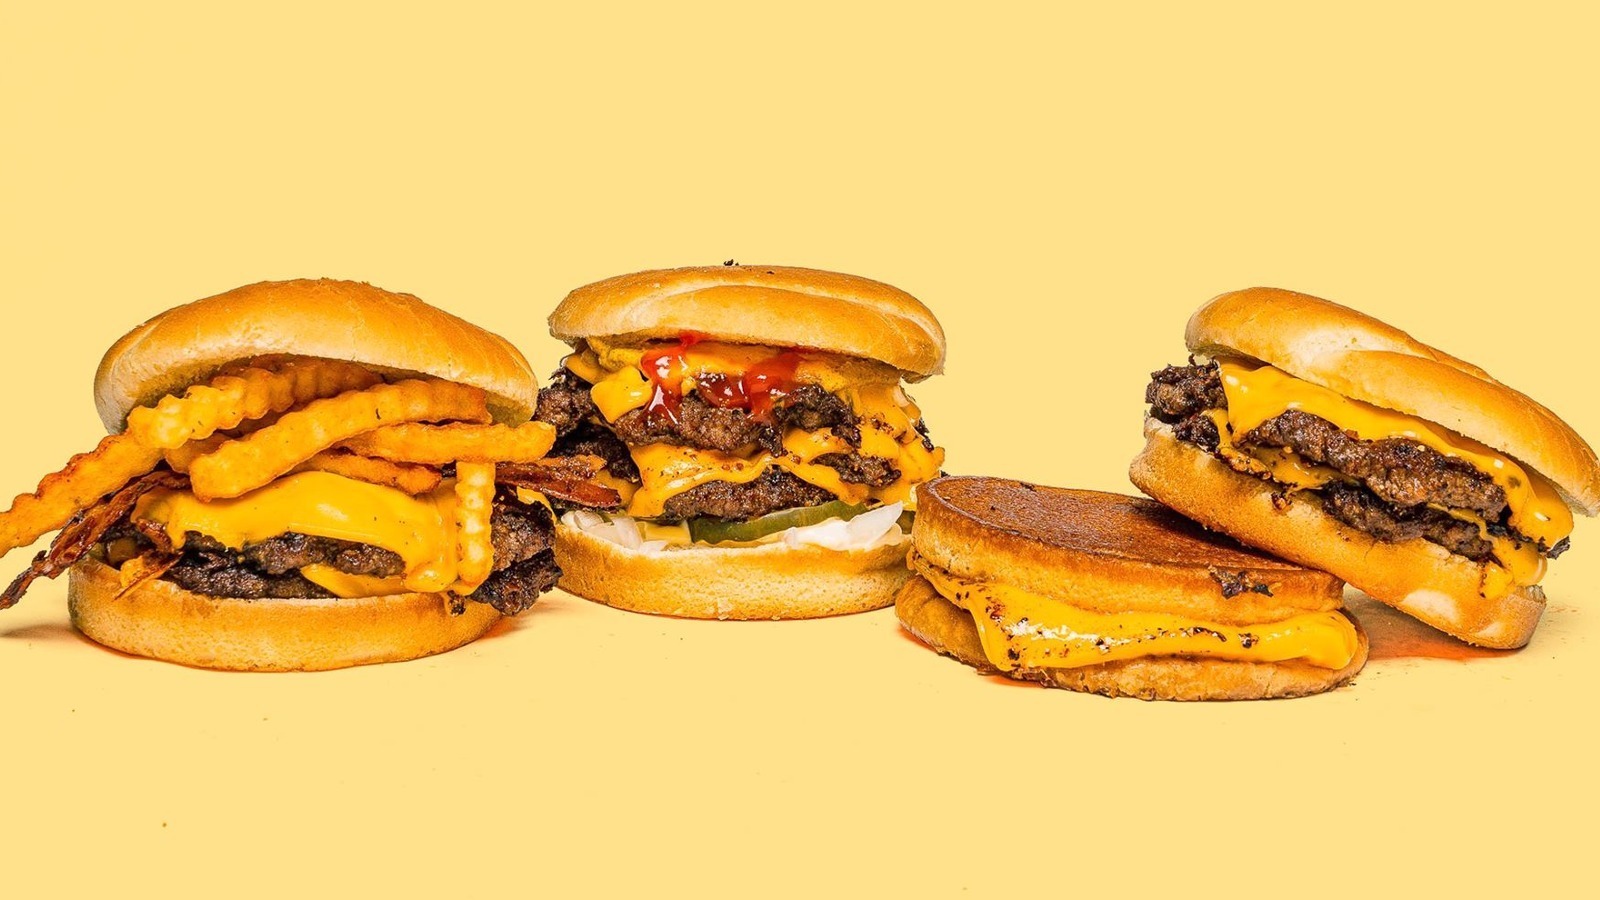 MrBeast Sues Food Partner Over 'Inedible' MrBeast Burgers